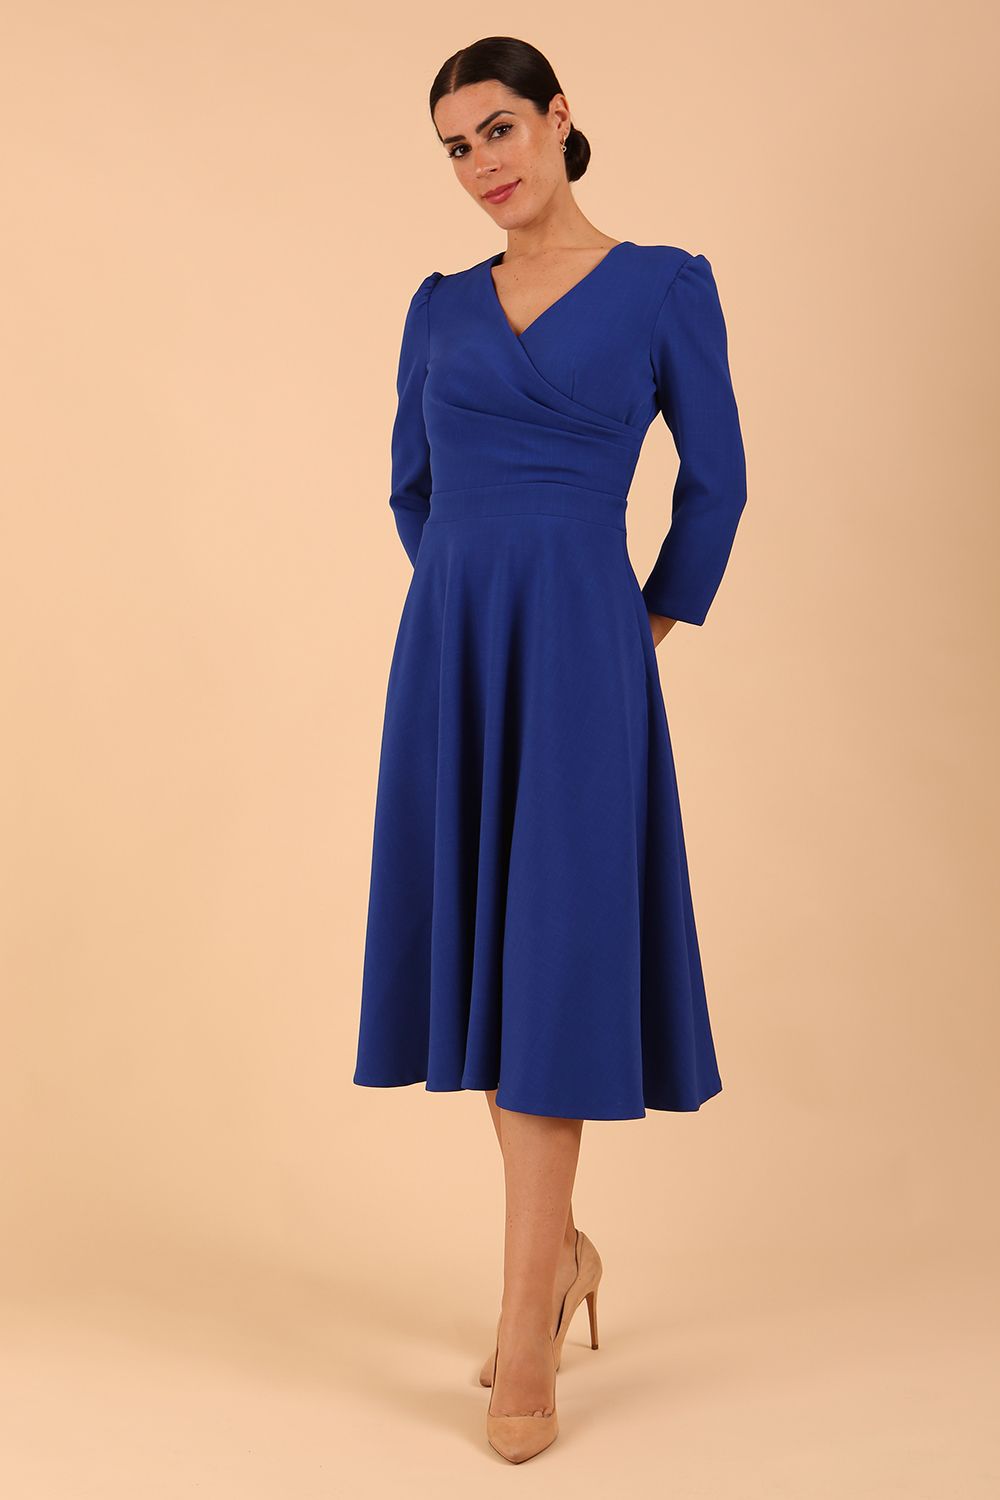 Model wearing diva catwalk Kate 3/4 Length Sleeve A-Line Swing Dress in Cobalt Blue colour